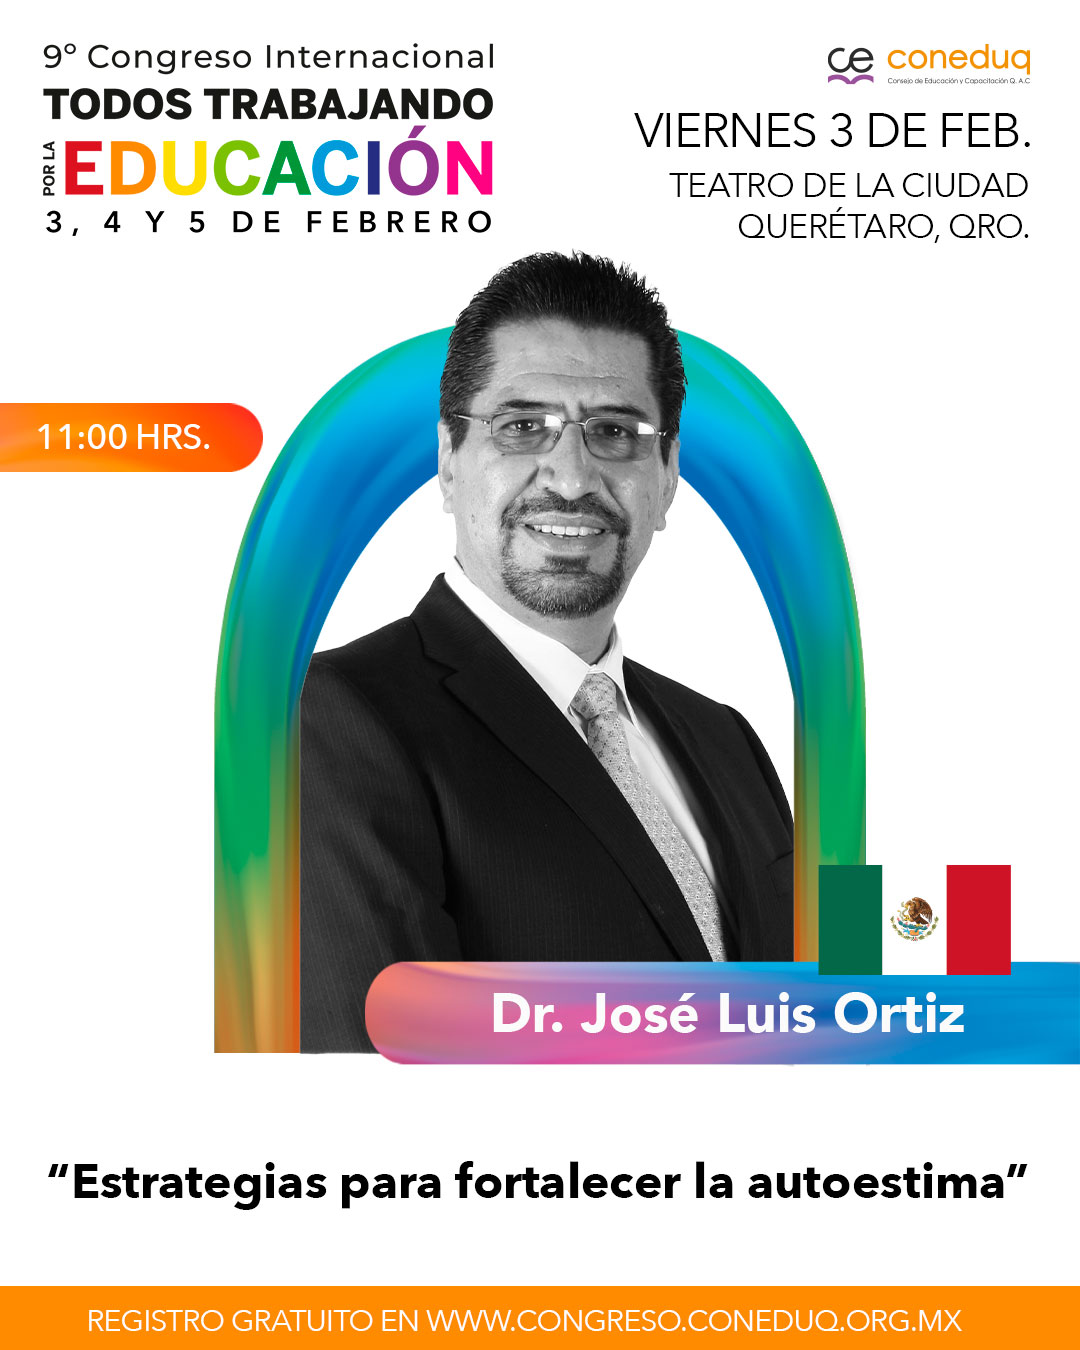 Dr. José Luis Ortíz